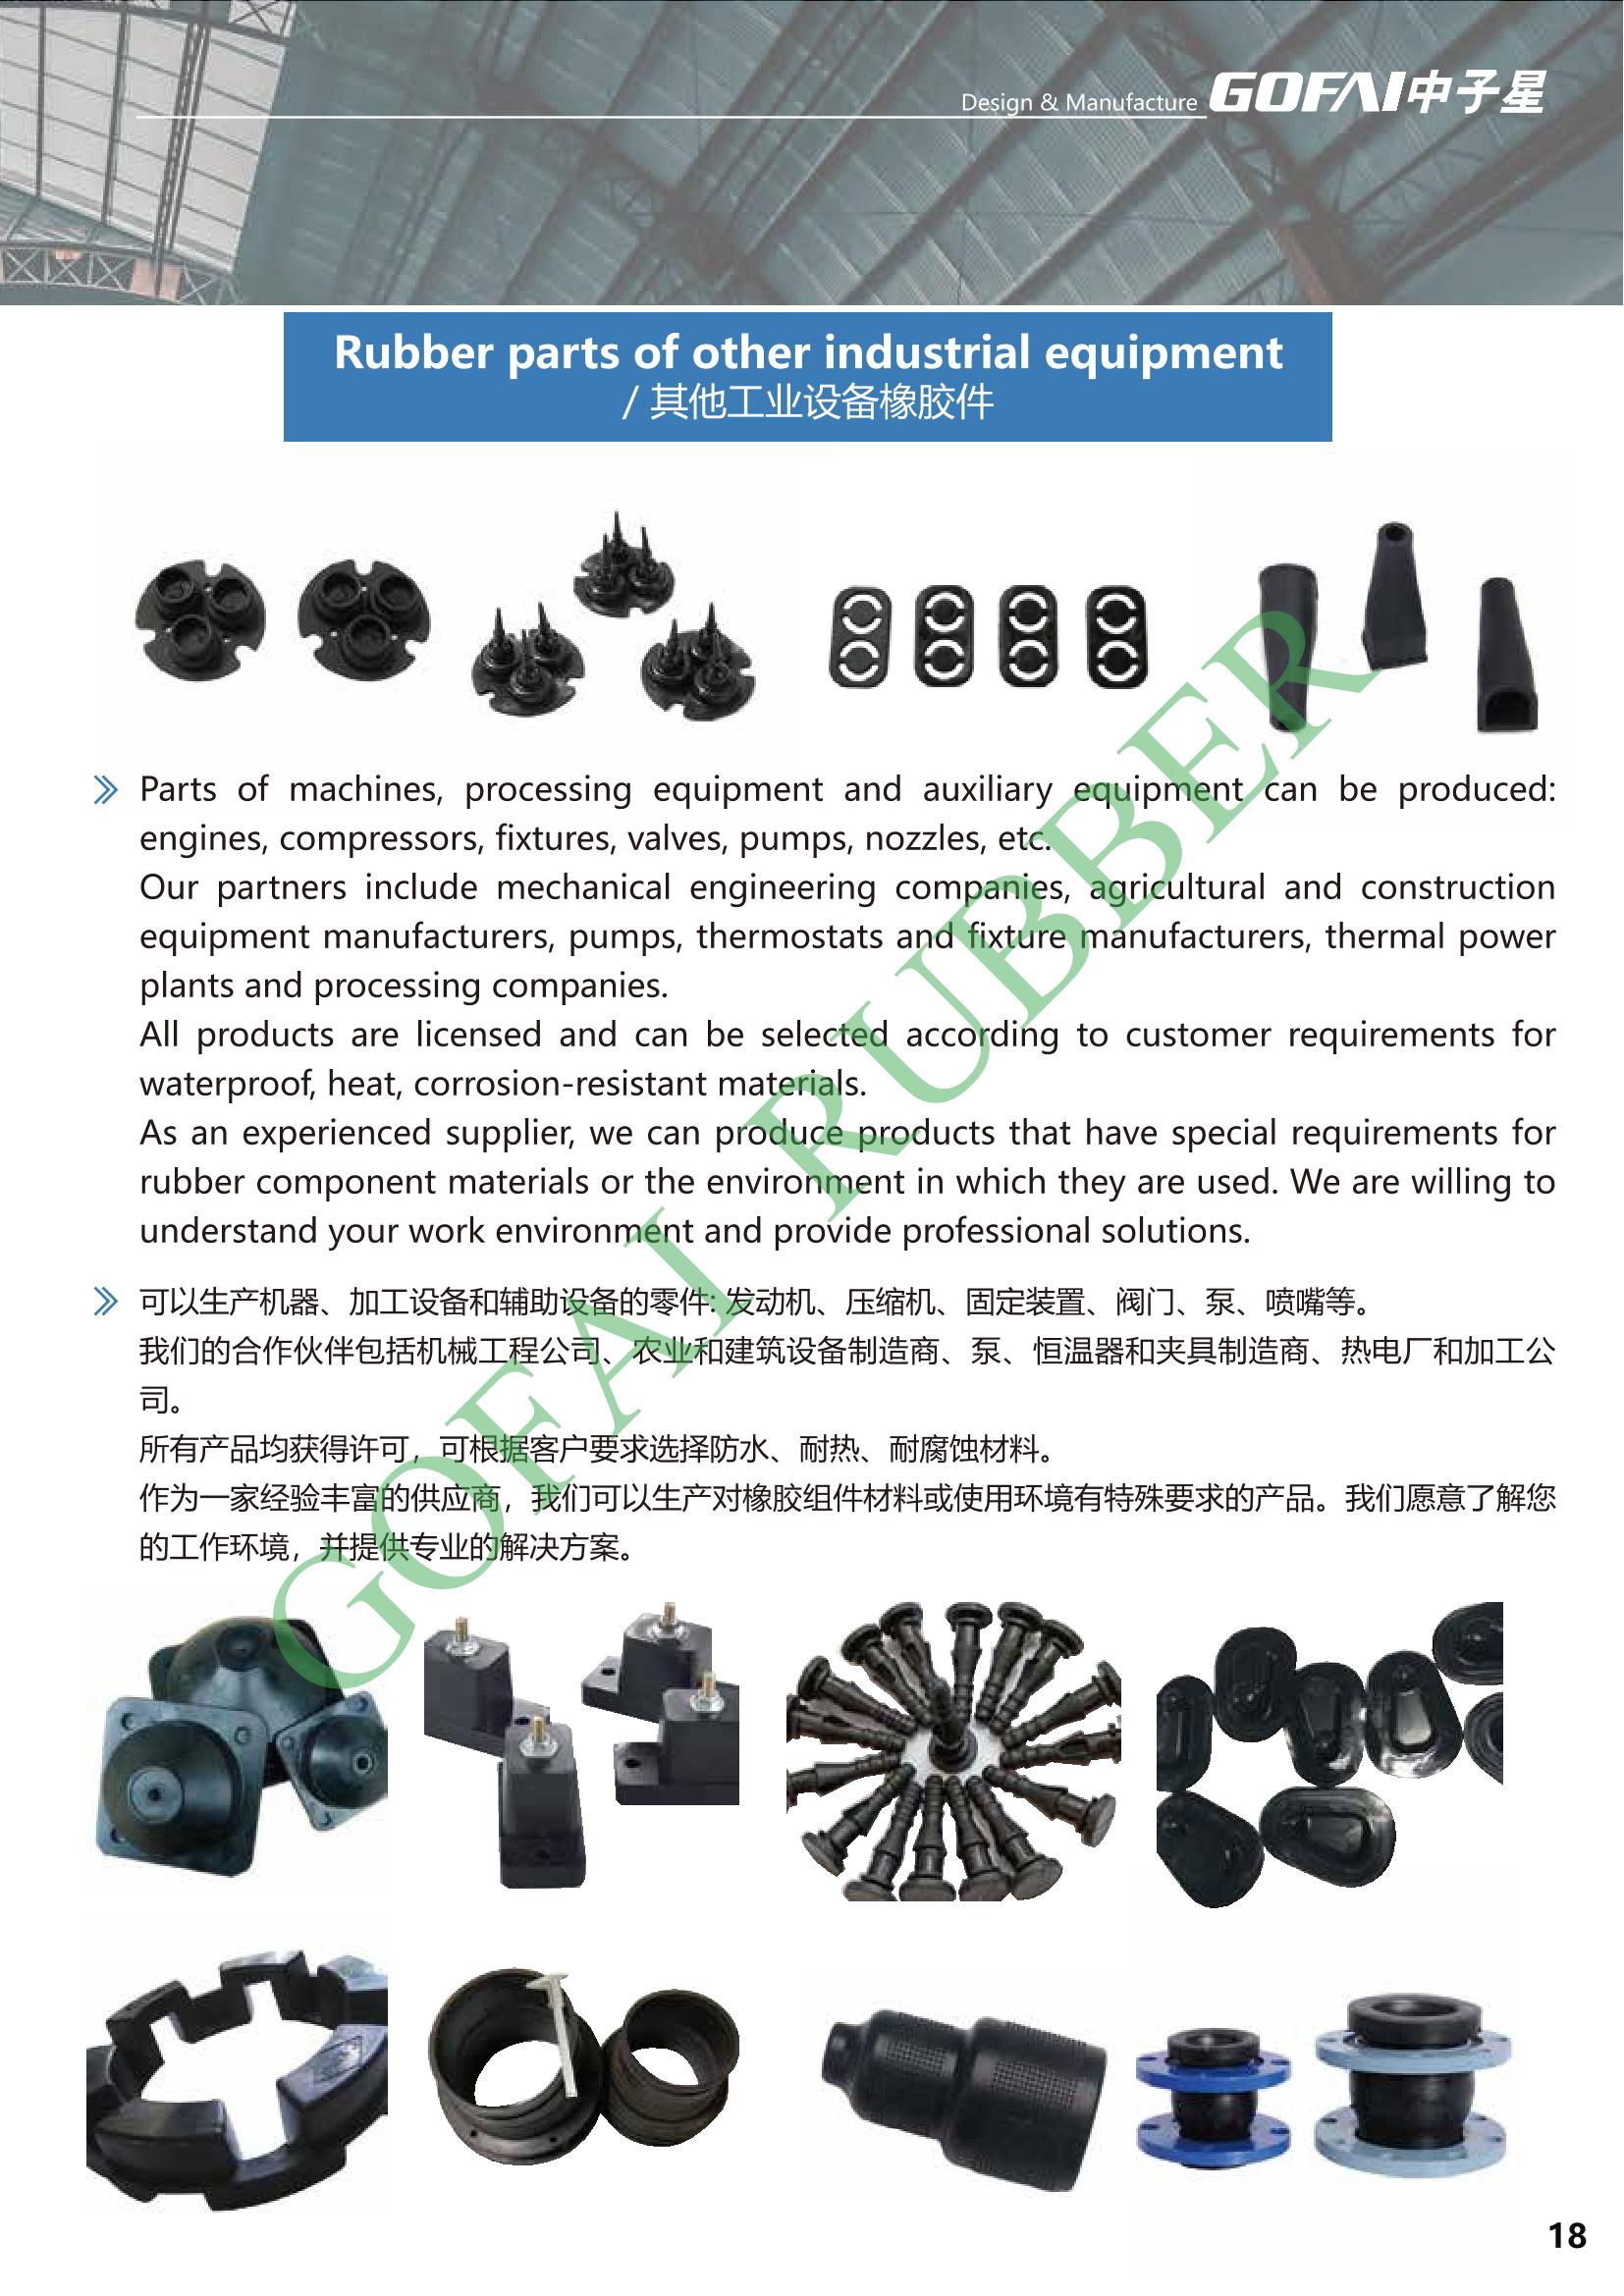 GOFAI rubberplastic products cataloge_18.jpg